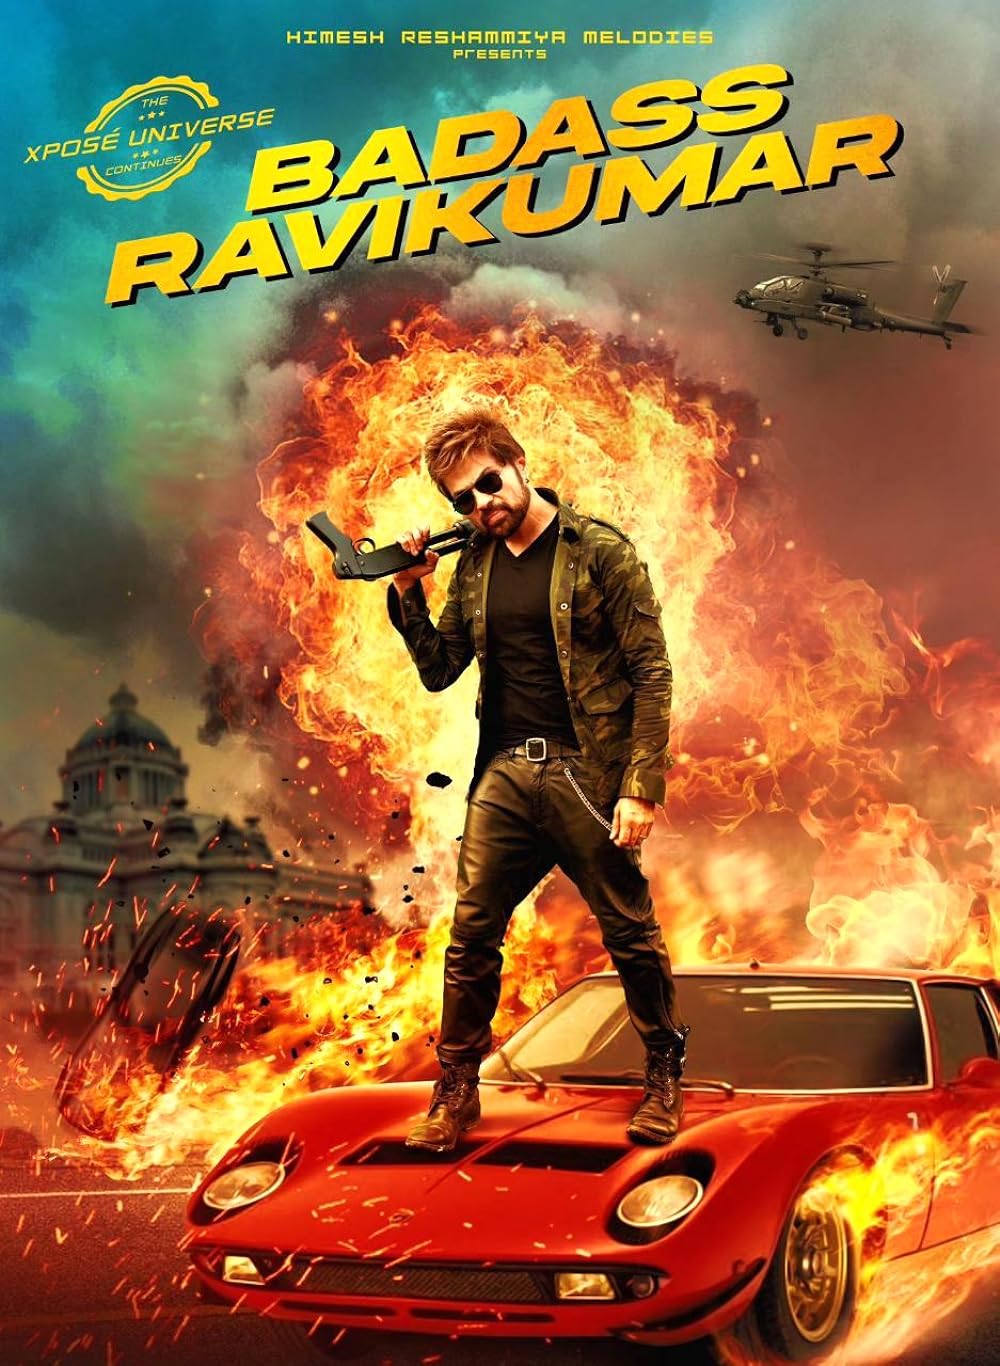 Badass Ravikumar Movie Review